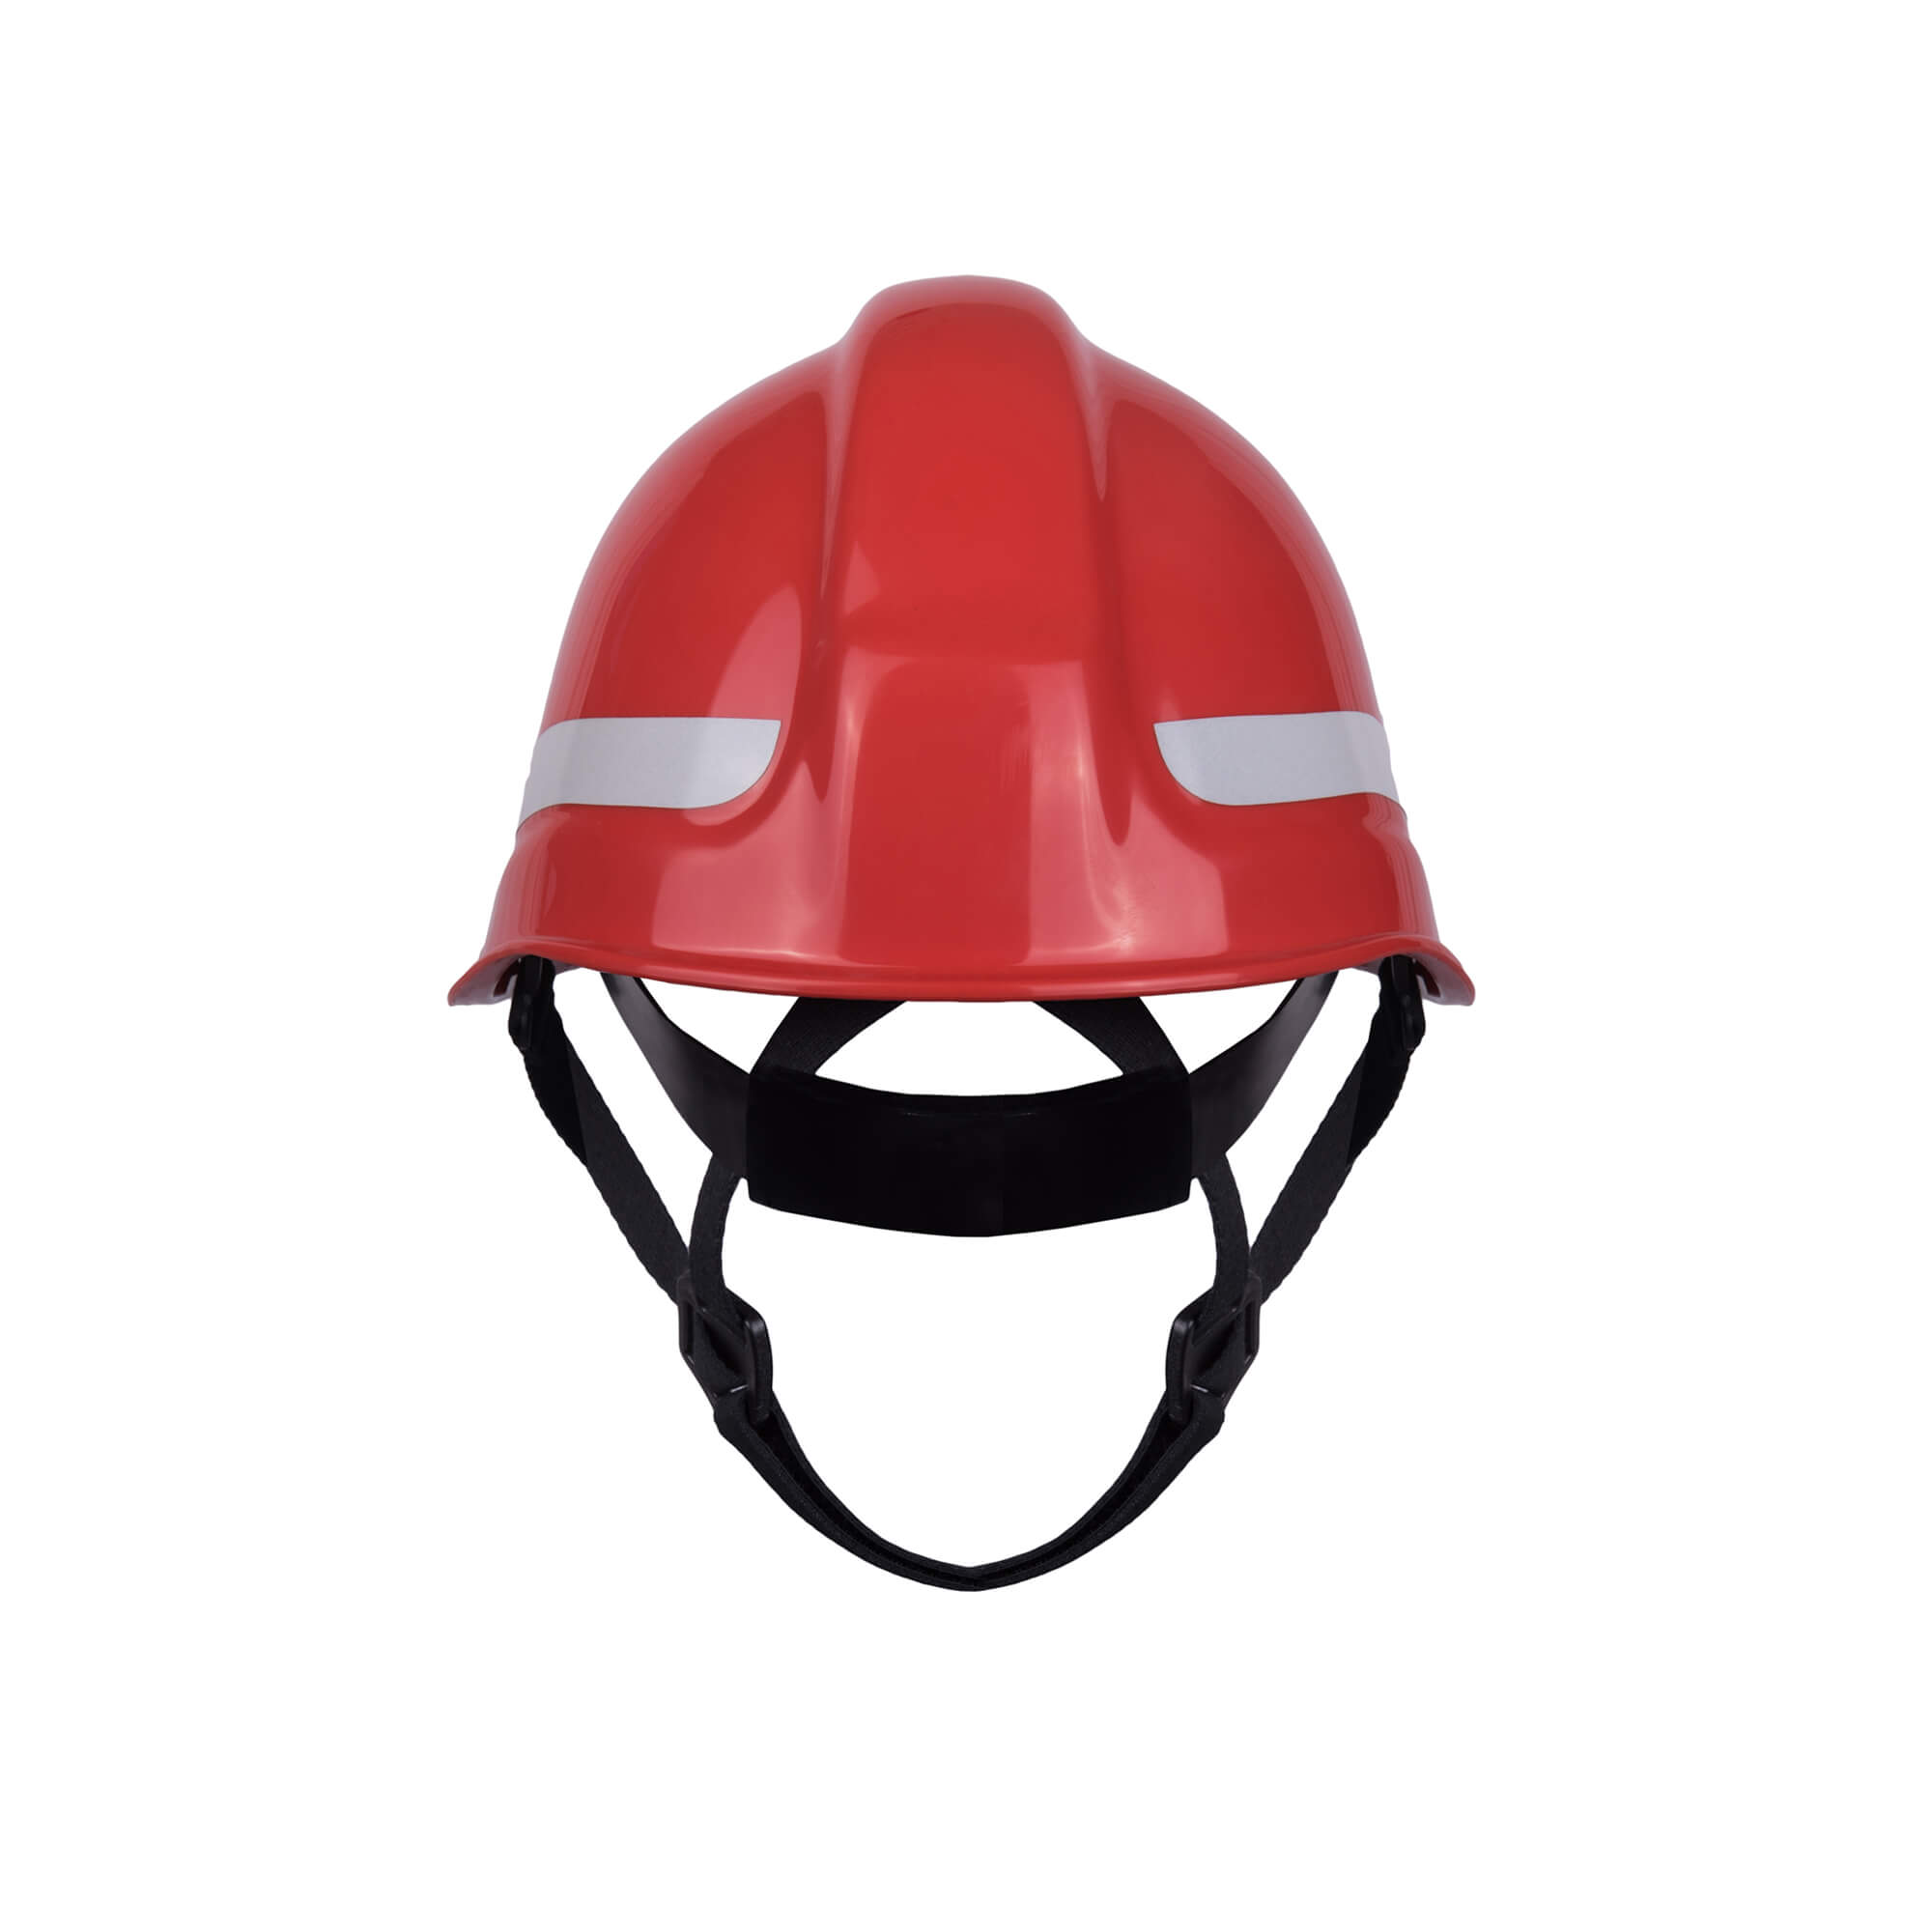 firefighter-helmet-compact-iv